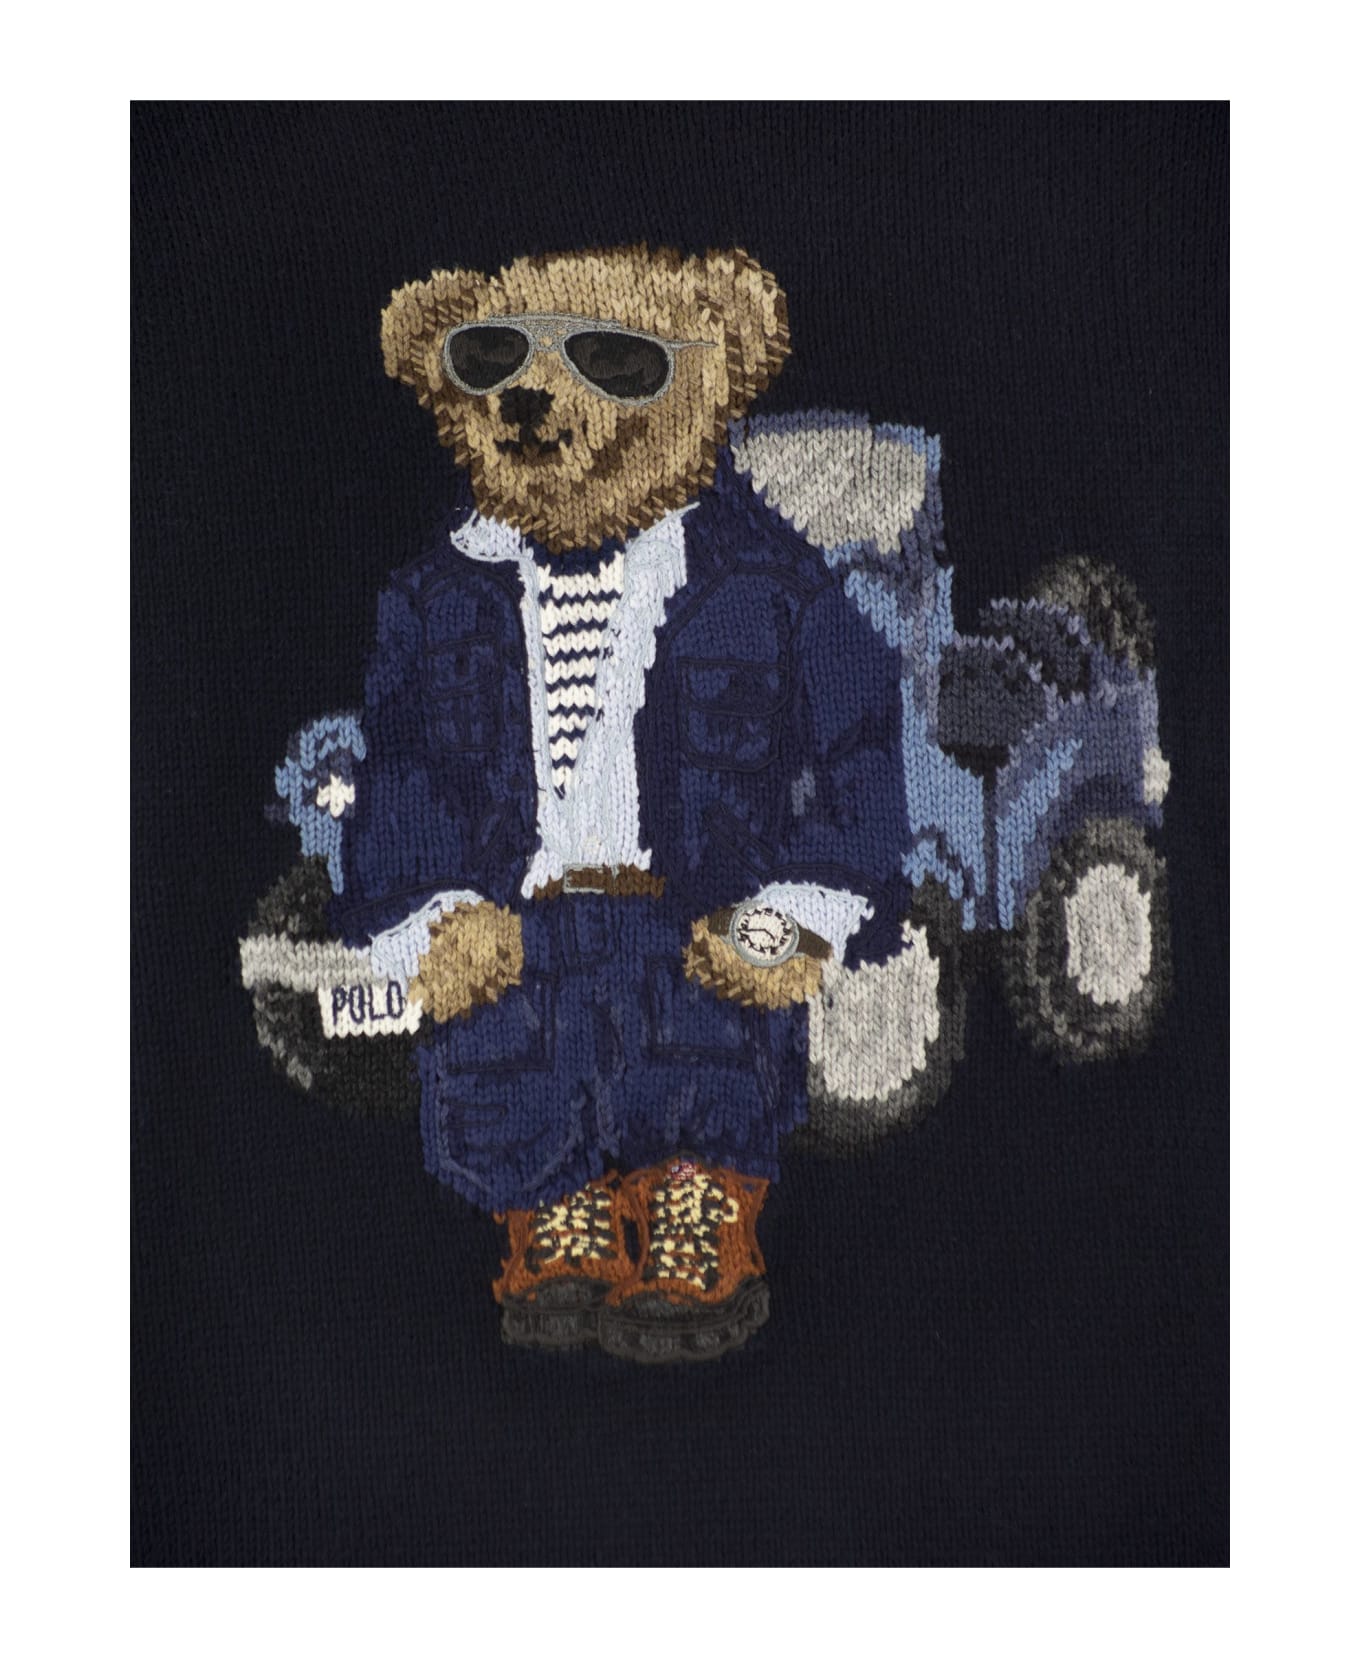 Polo Ralph Lauren Polo Bear Sweater - Navy Blue